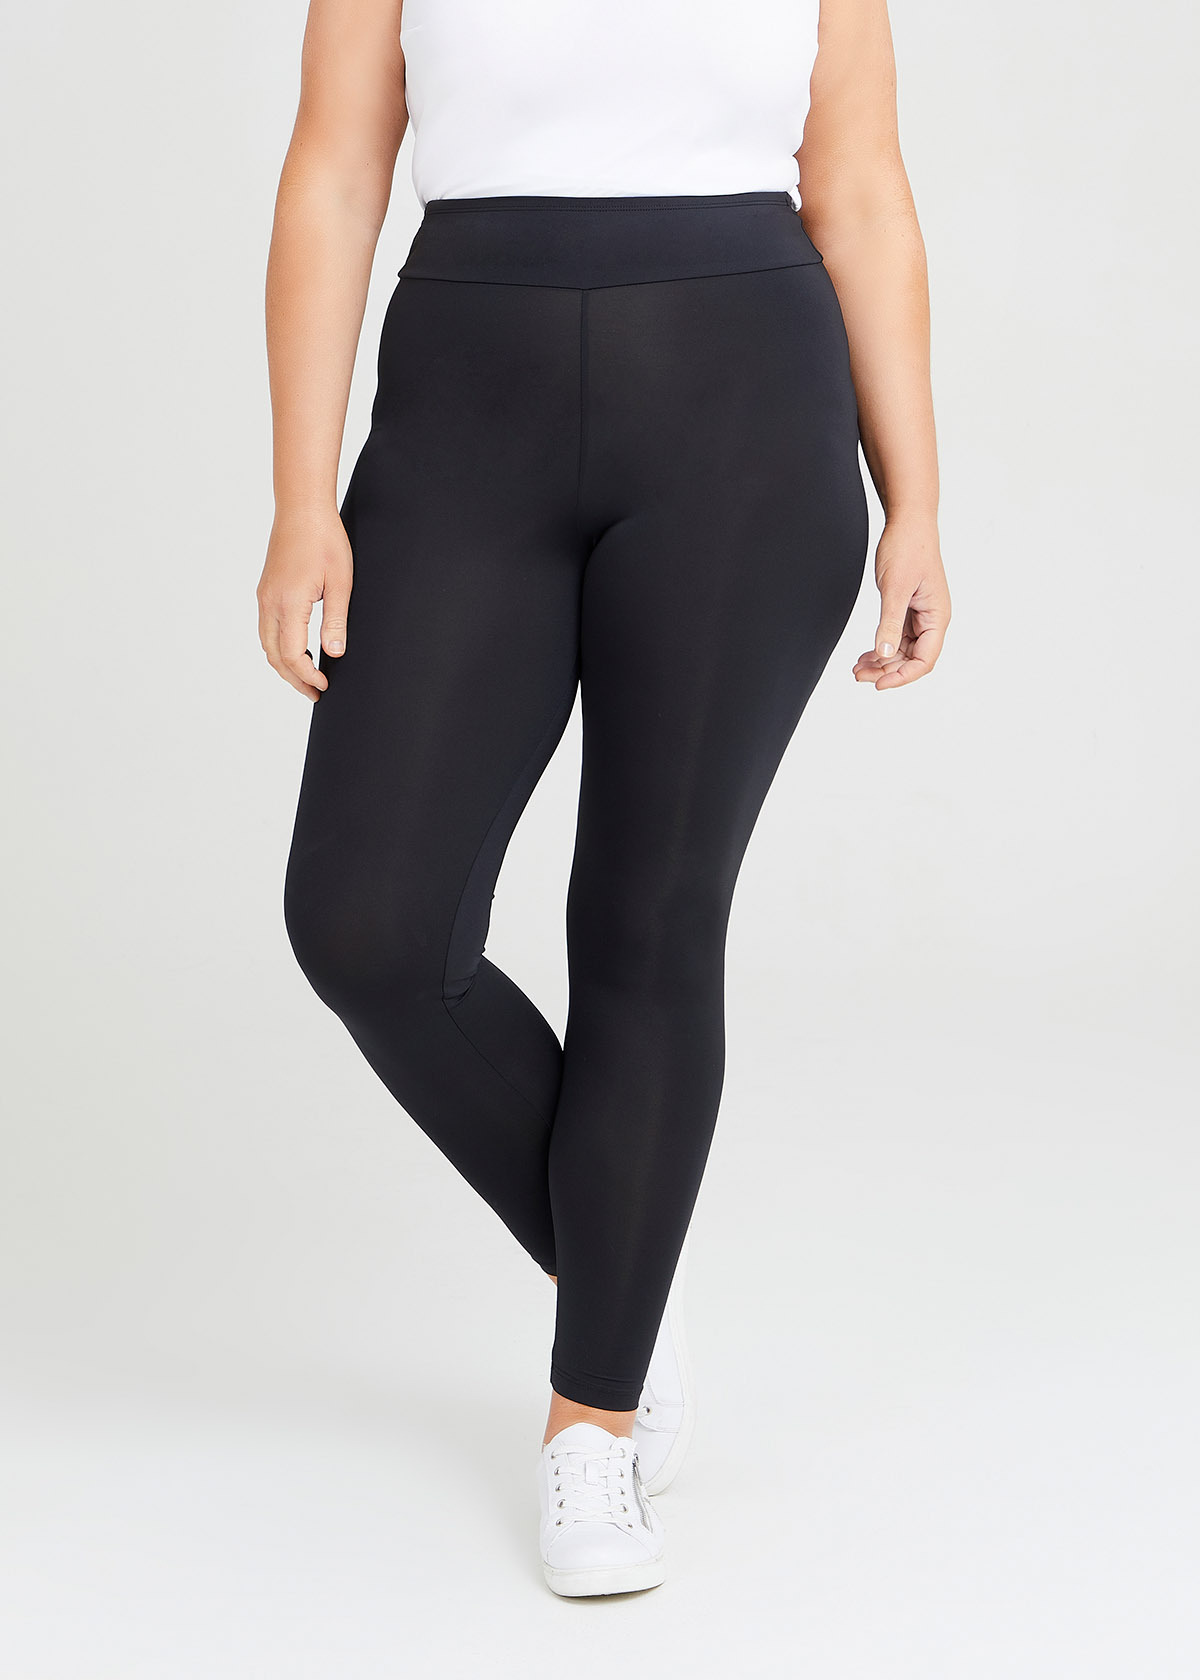 Shop Plus Size Integra Full Length Legging in Black | Taking Shape AU